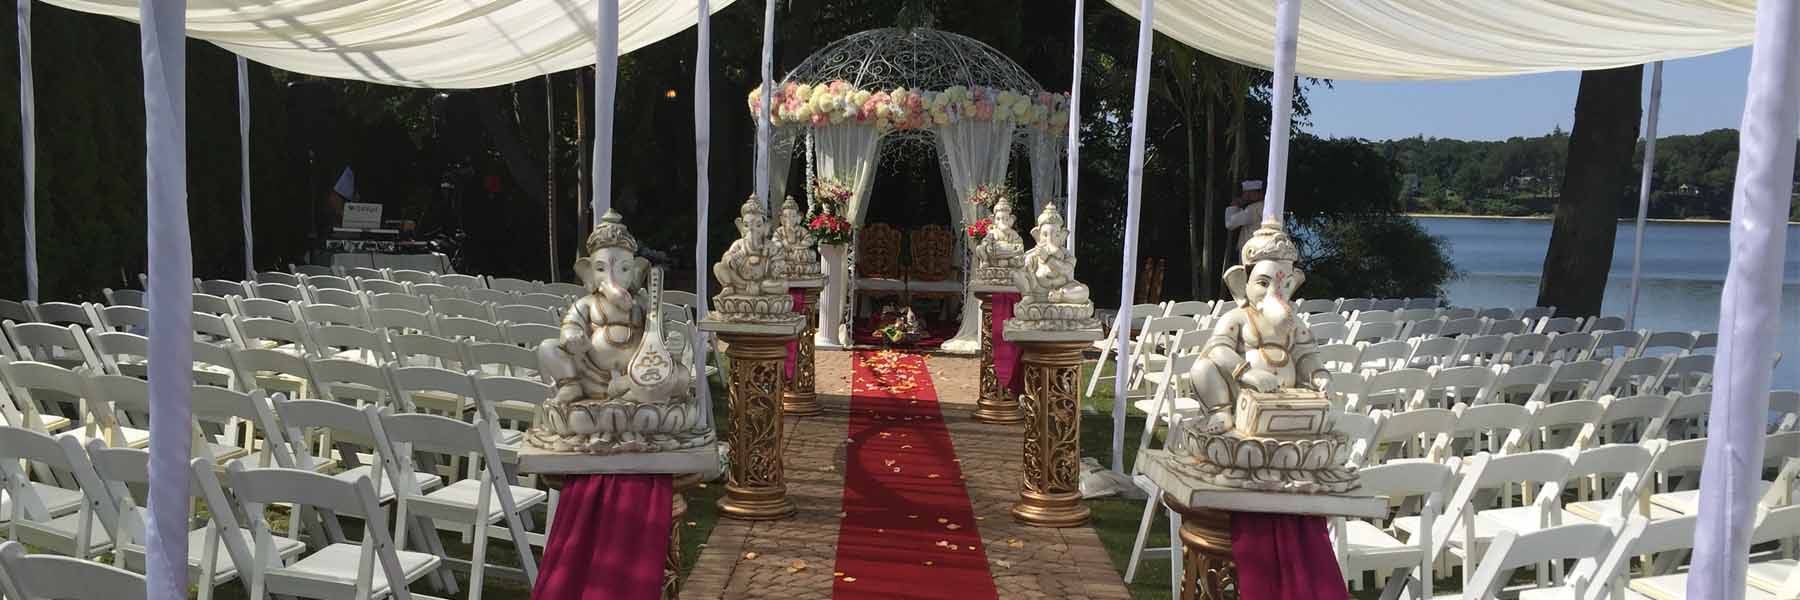 Indian-Pakistani Wedding Venues Long Island